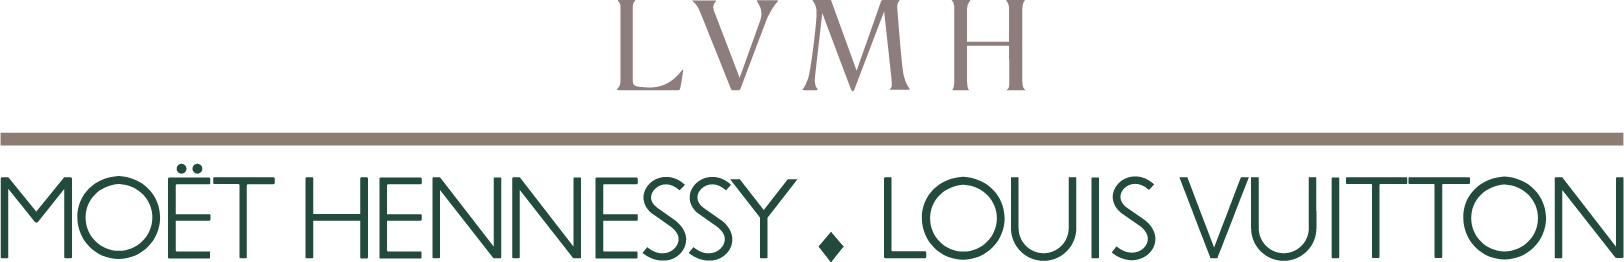 LVMH logo large (transparent PNG)